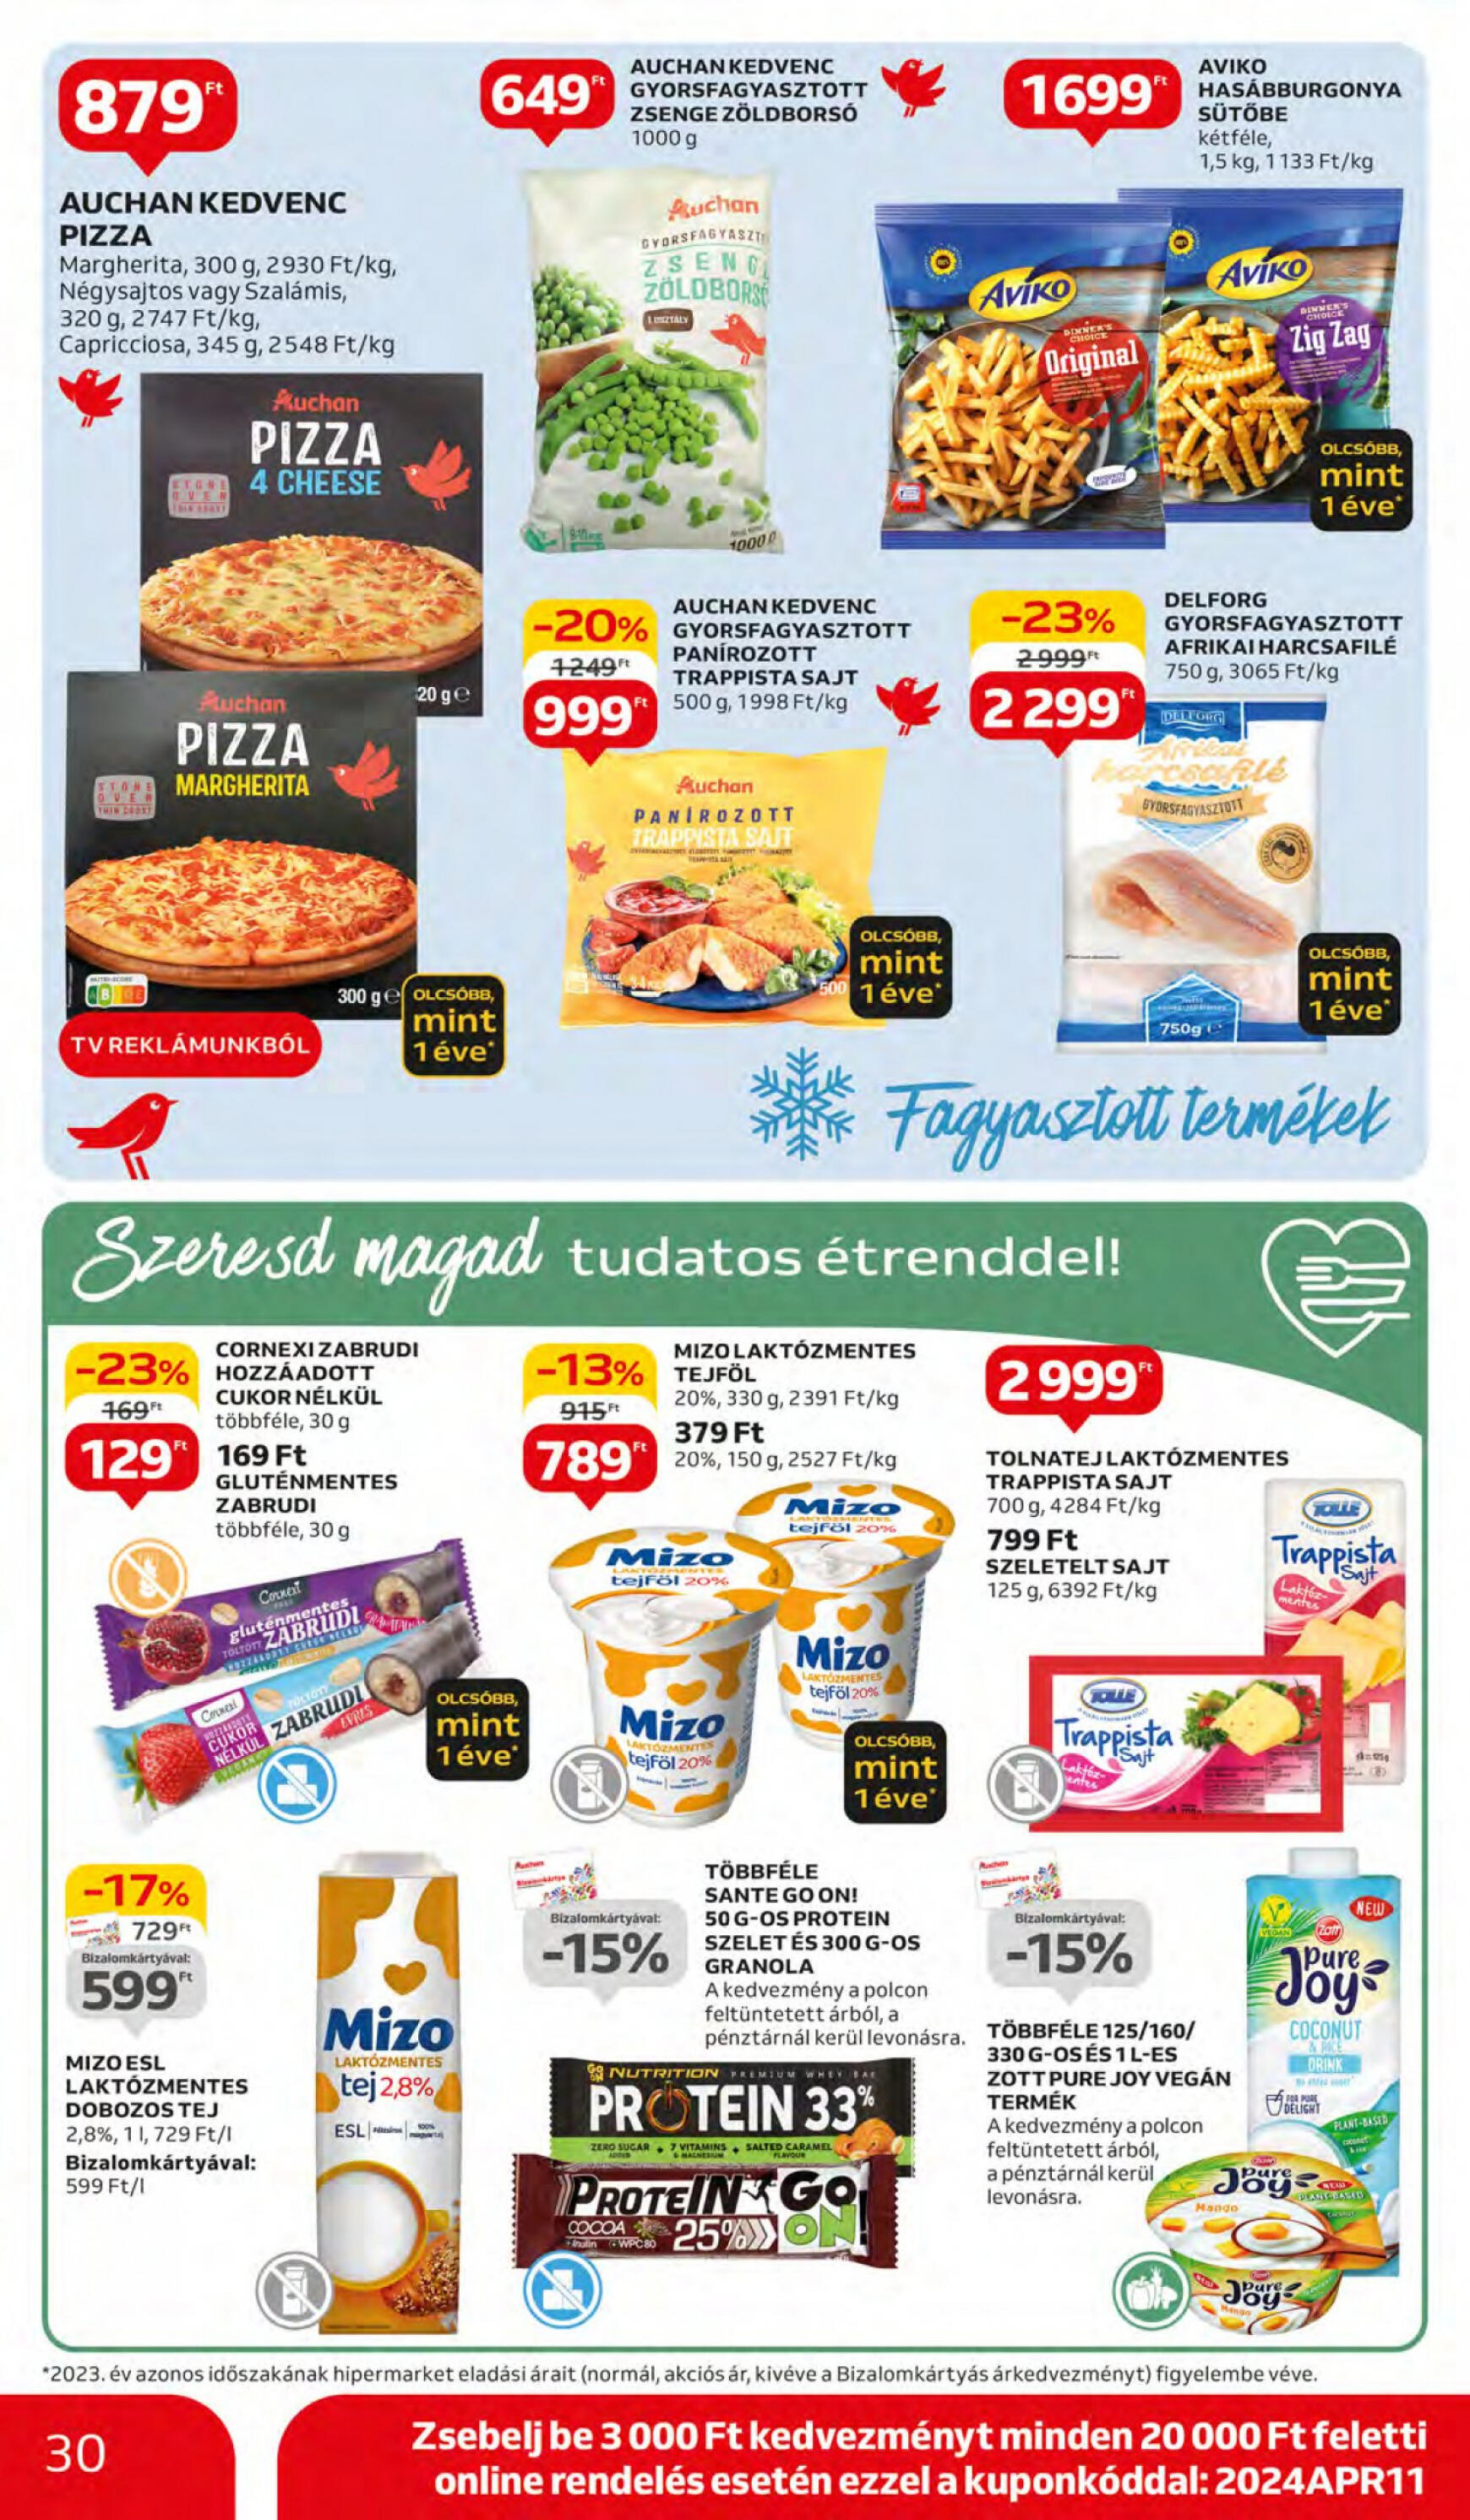 auchan - Aktuális újság Auchan 04.11. - 04.17. - page: 30